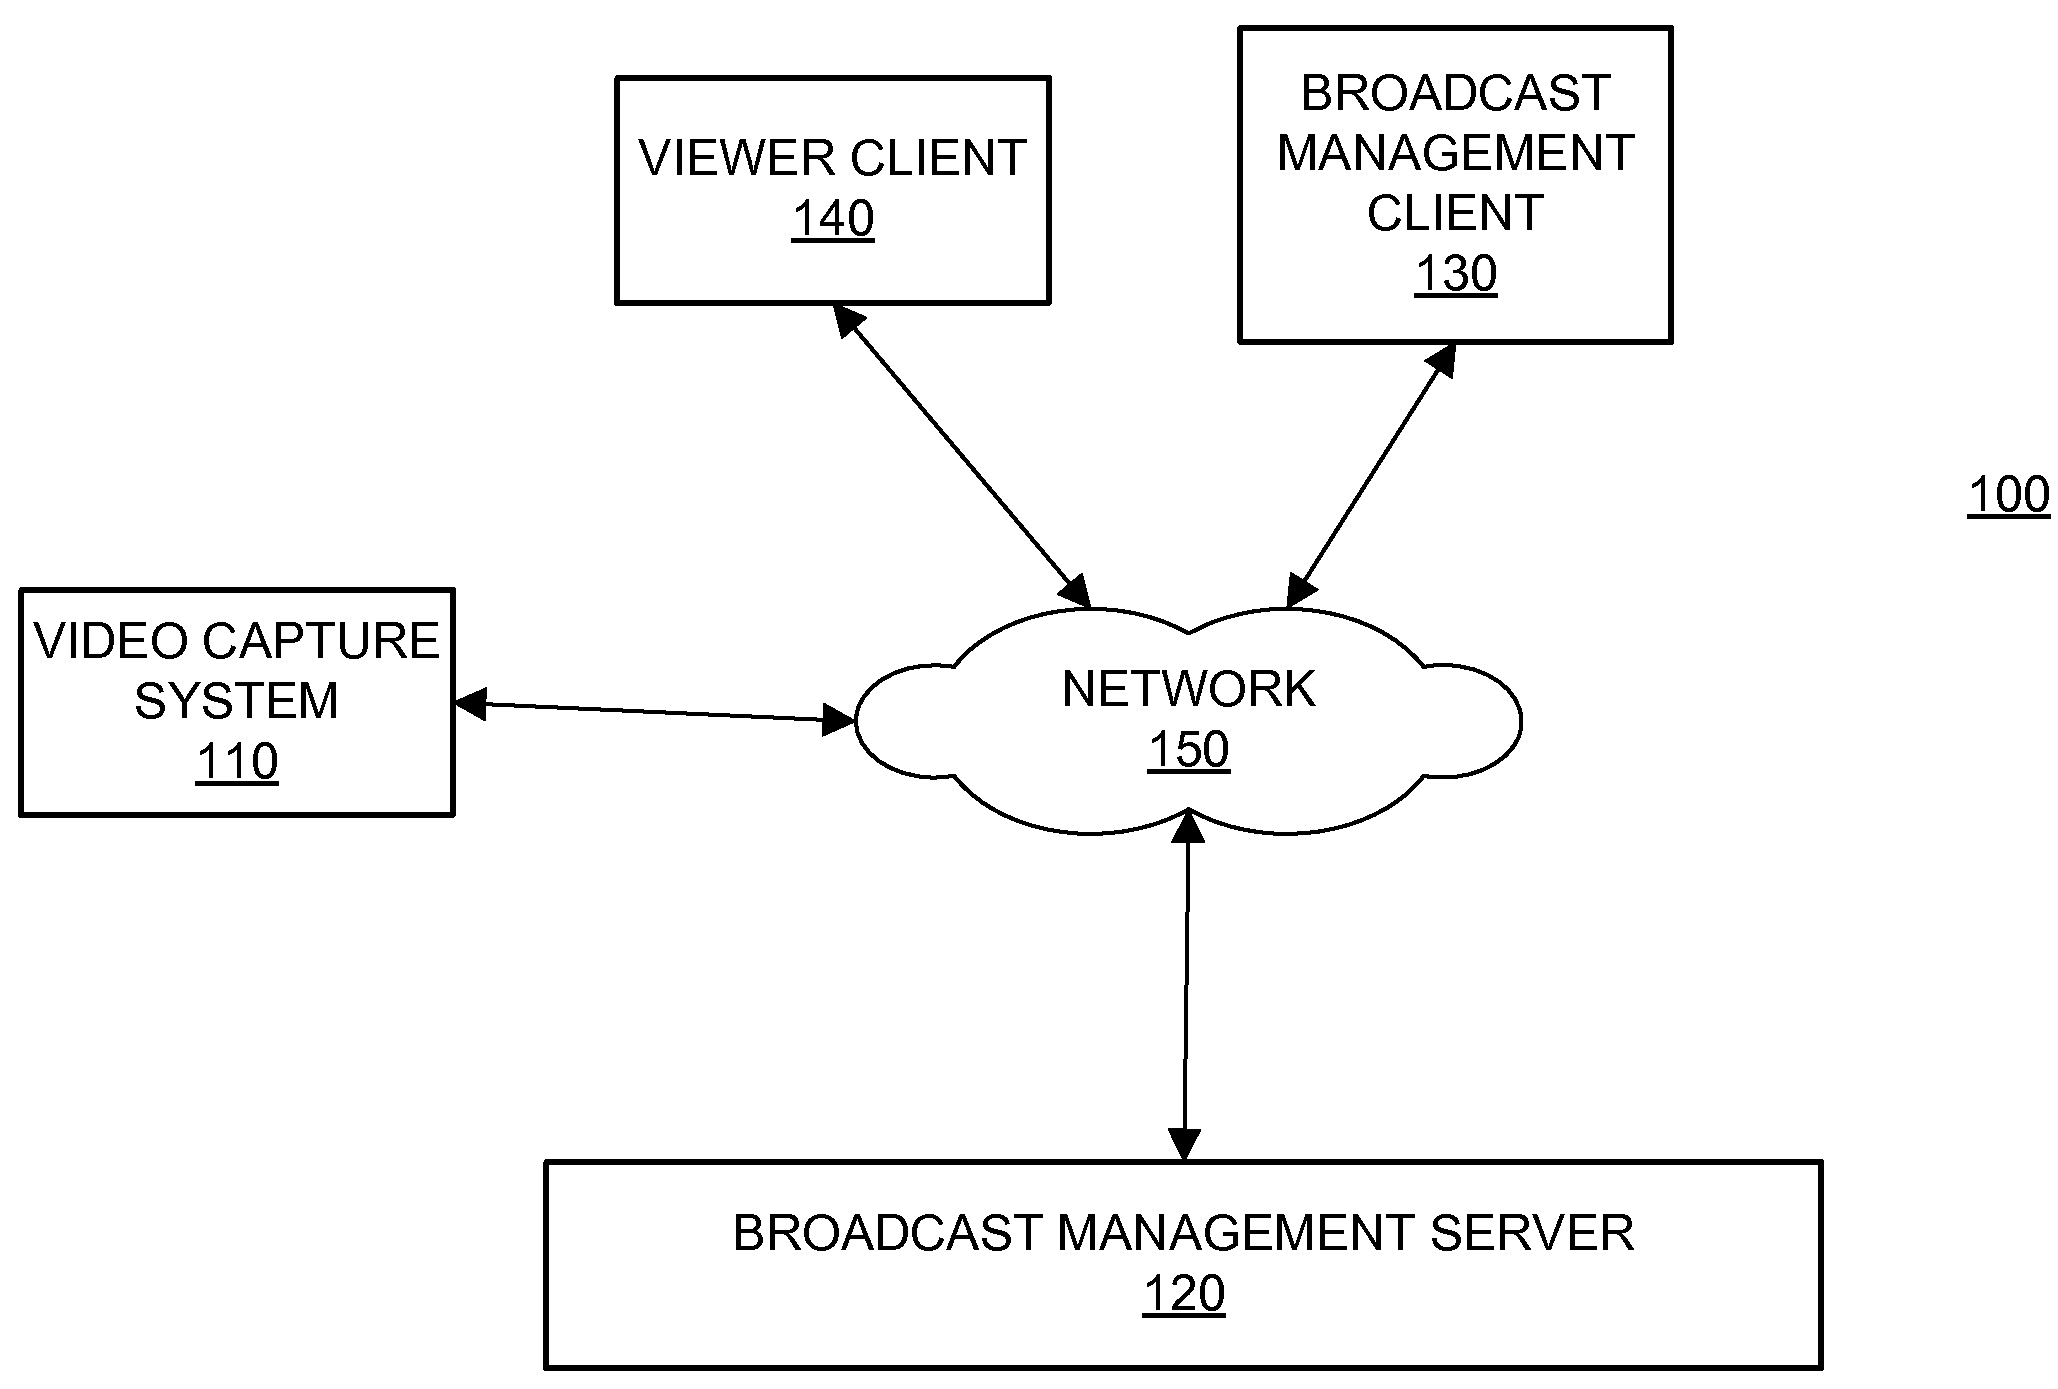 Broadcast management system